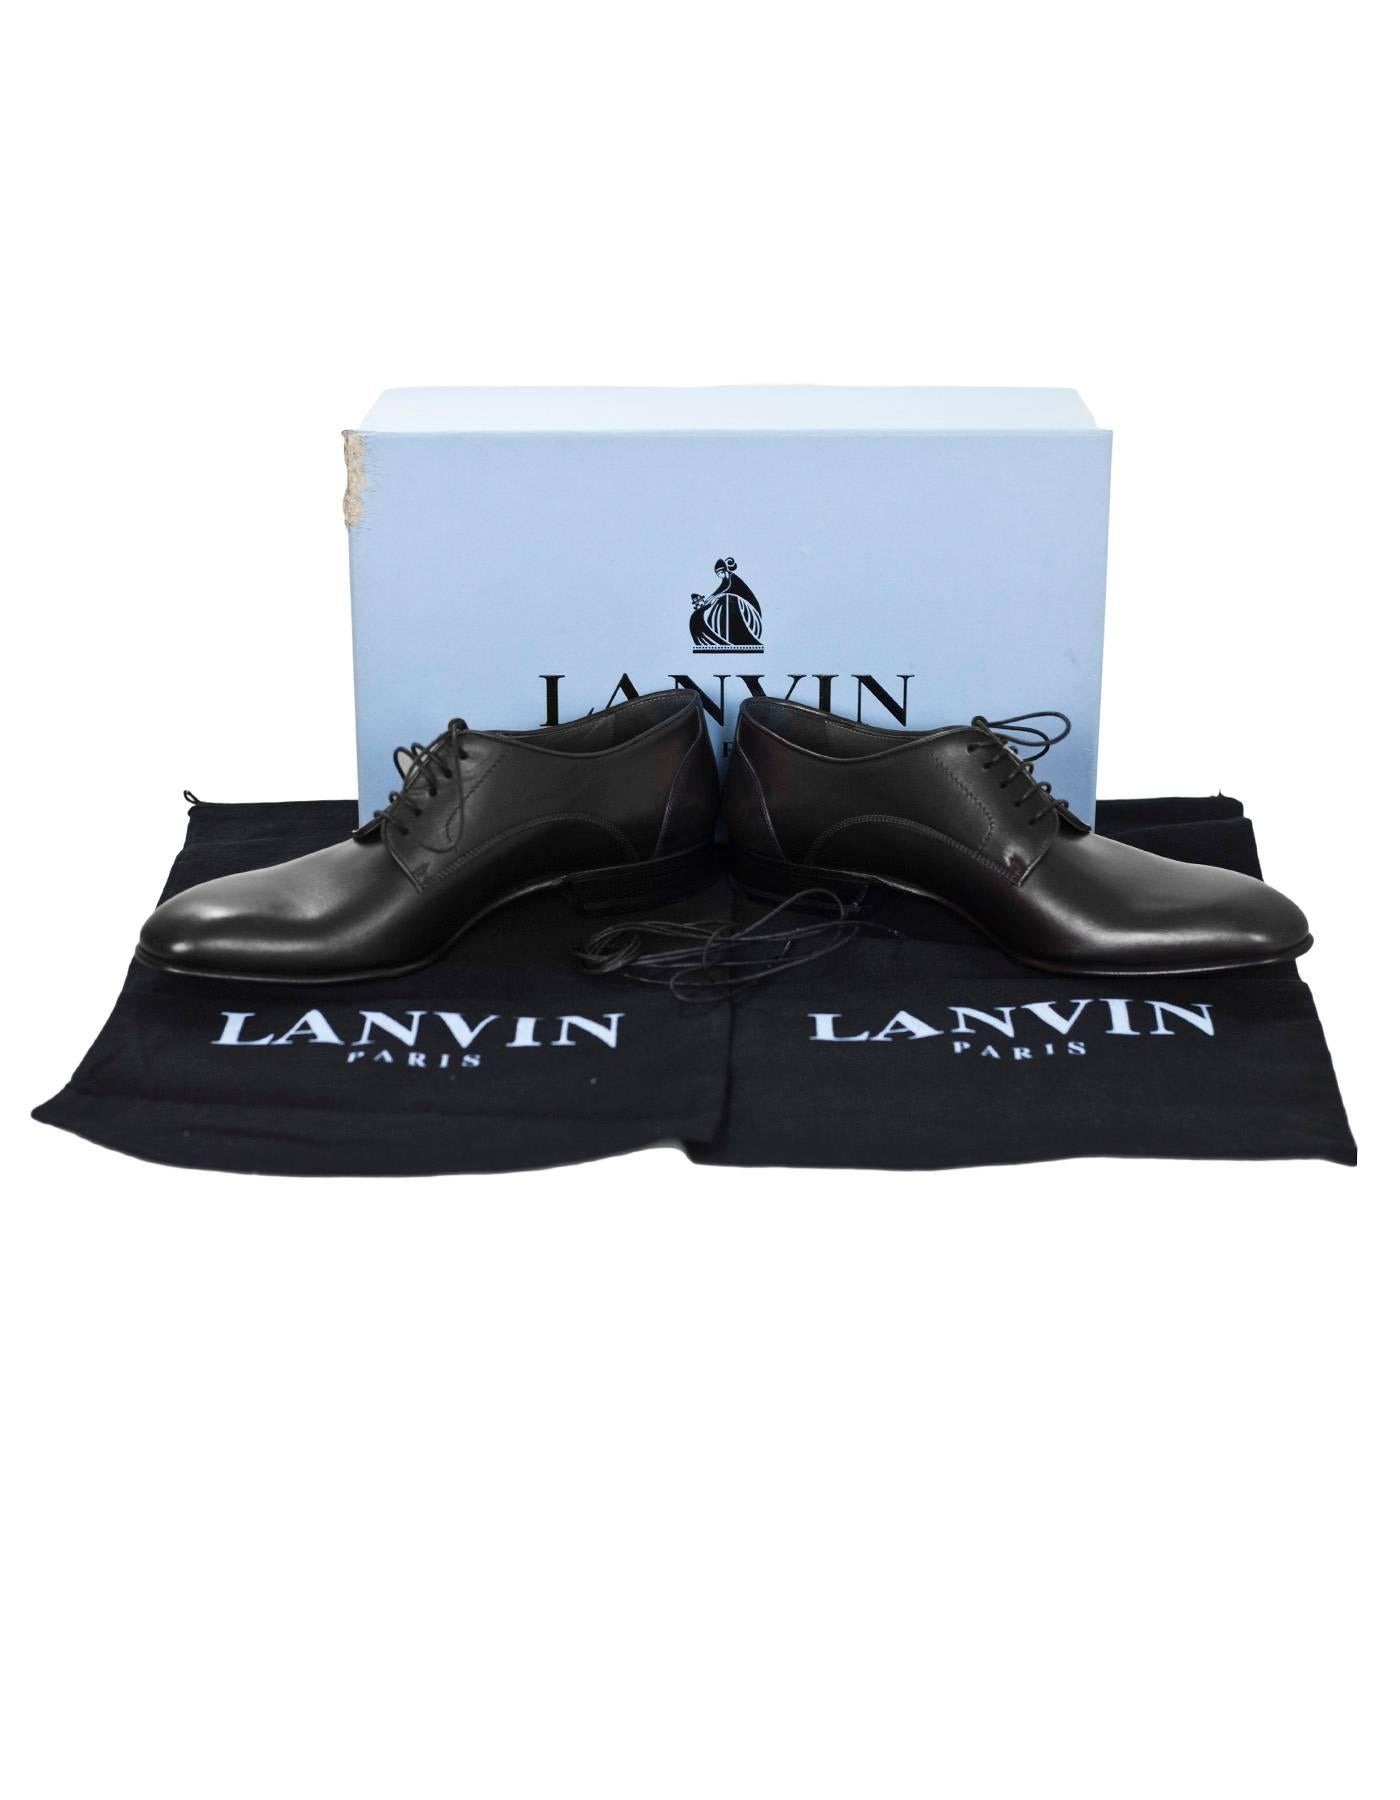 Lanvin Men's Black Leather Oxford Shoes Sz 8 NIB 2